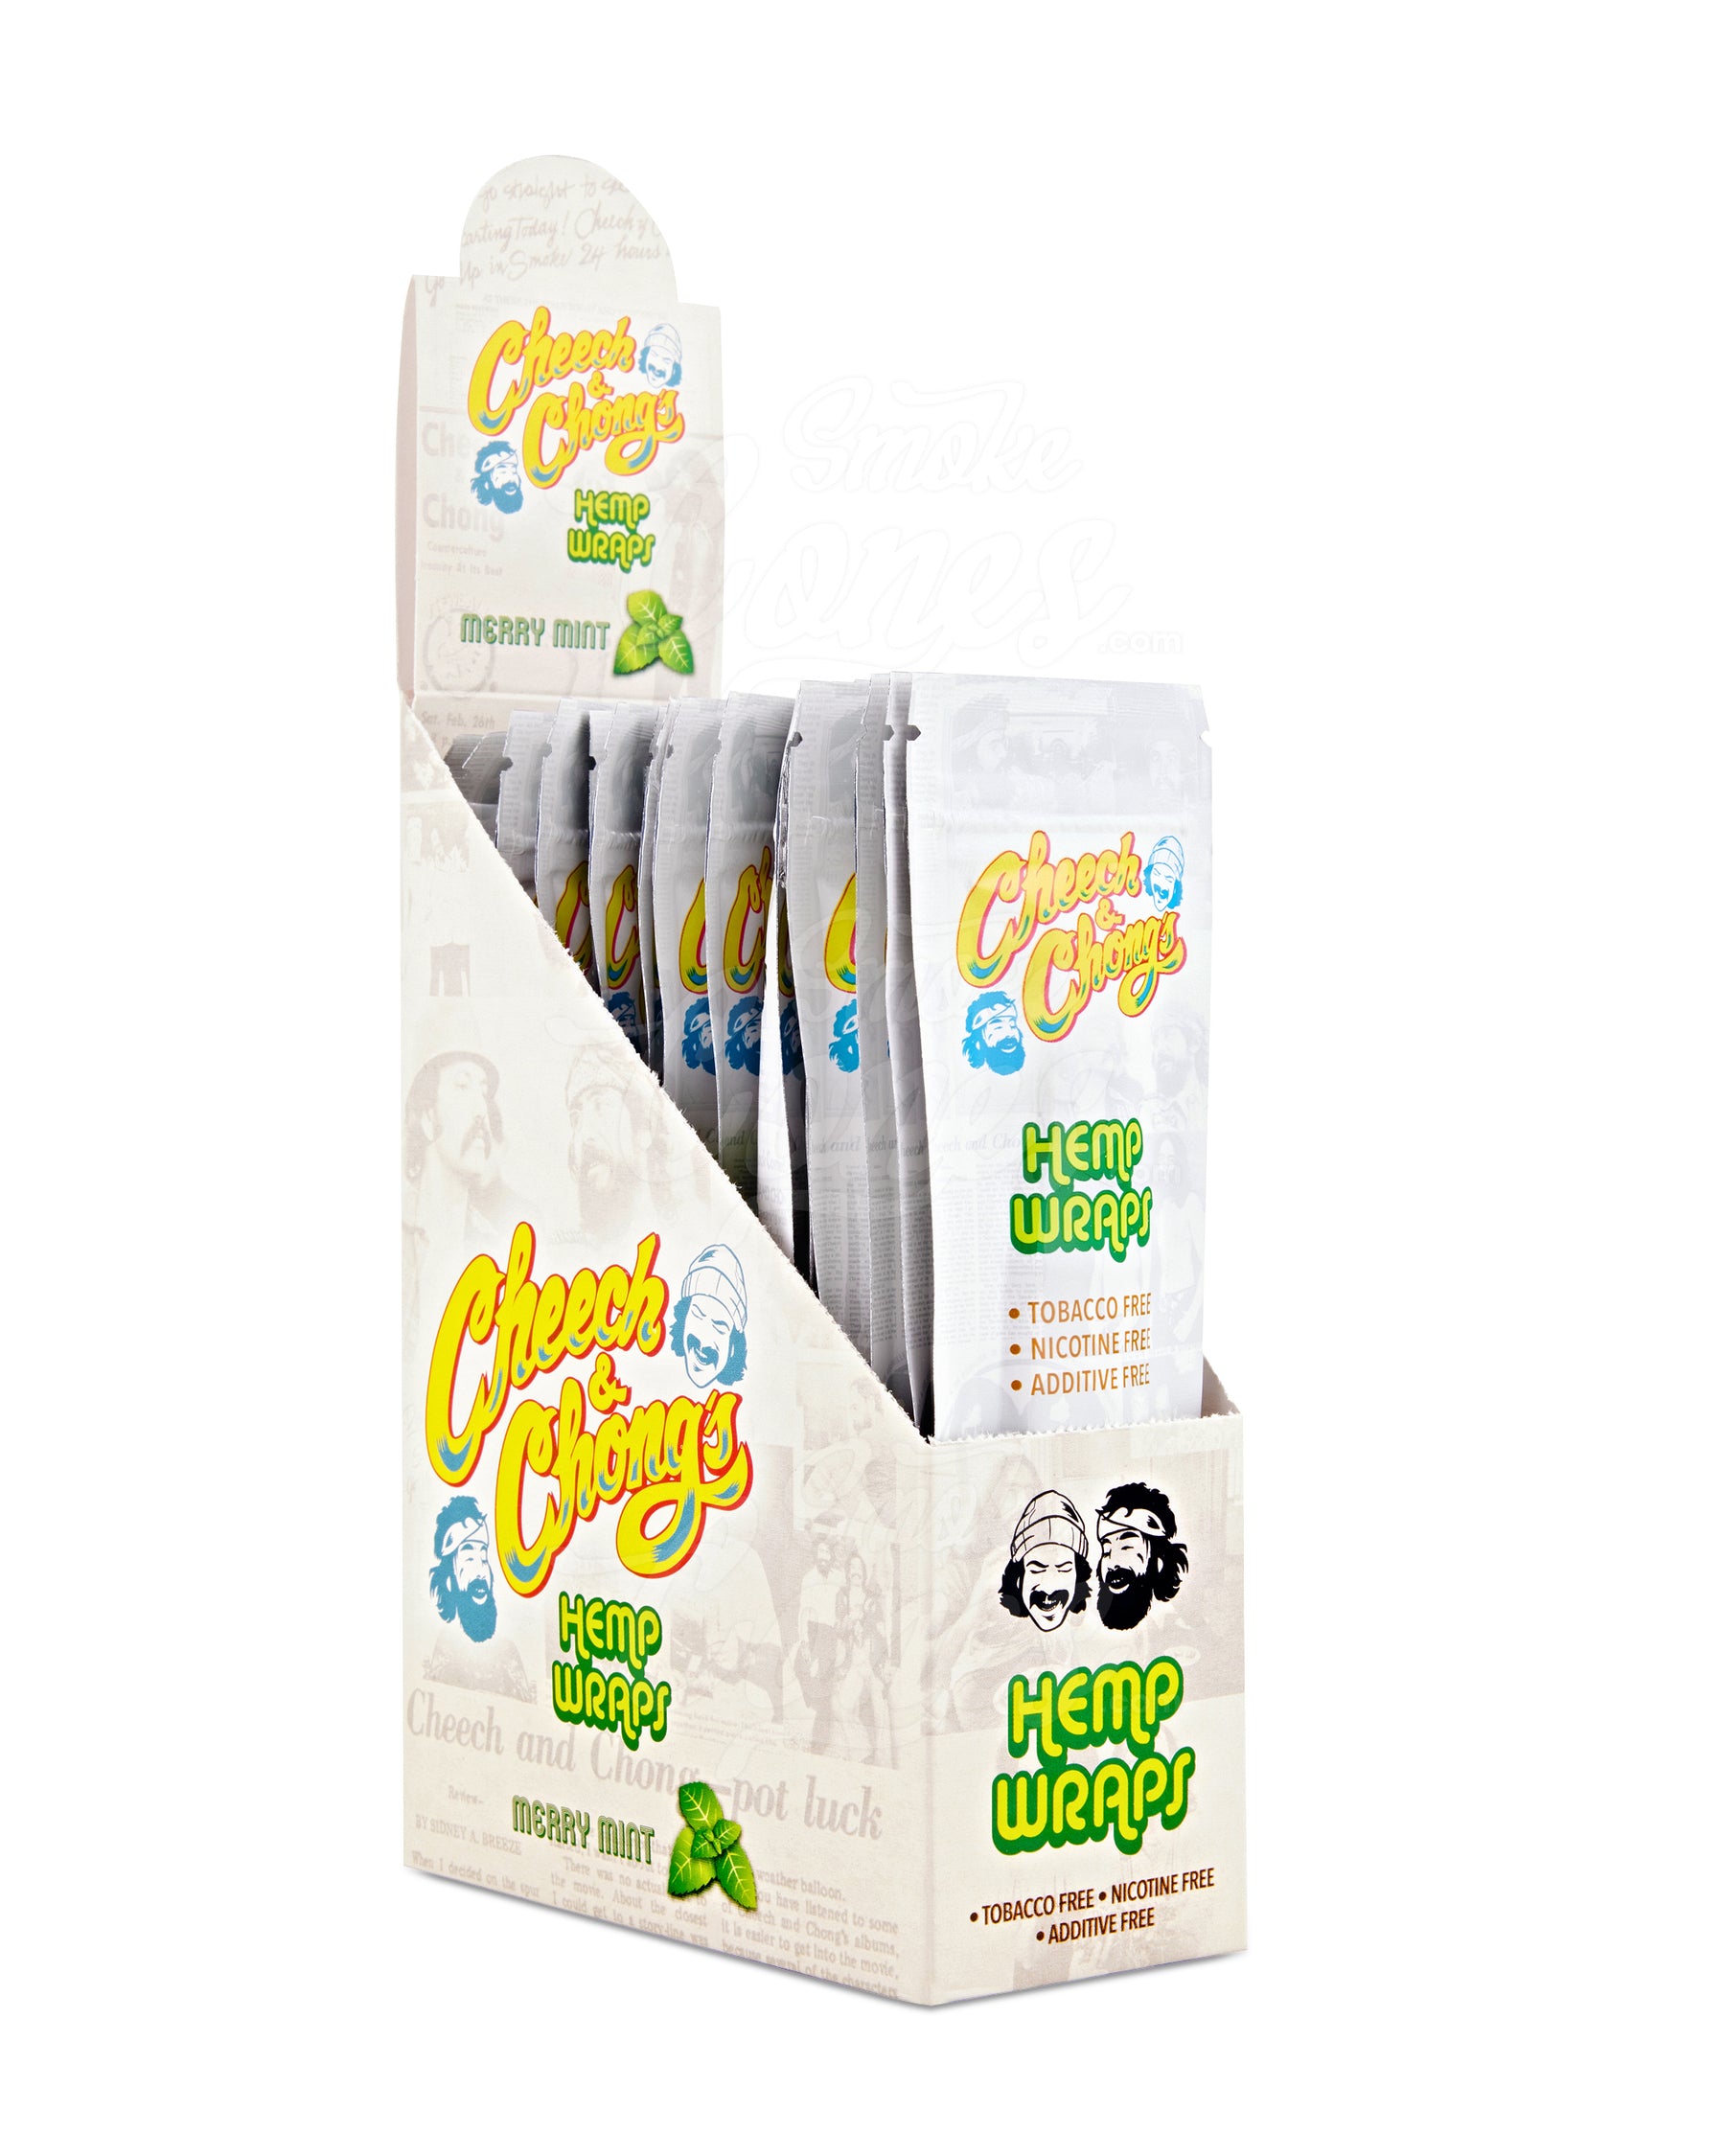 Cheech & Chong's Merry Mint Organic Hemp Blunt Wraps - 25/Box